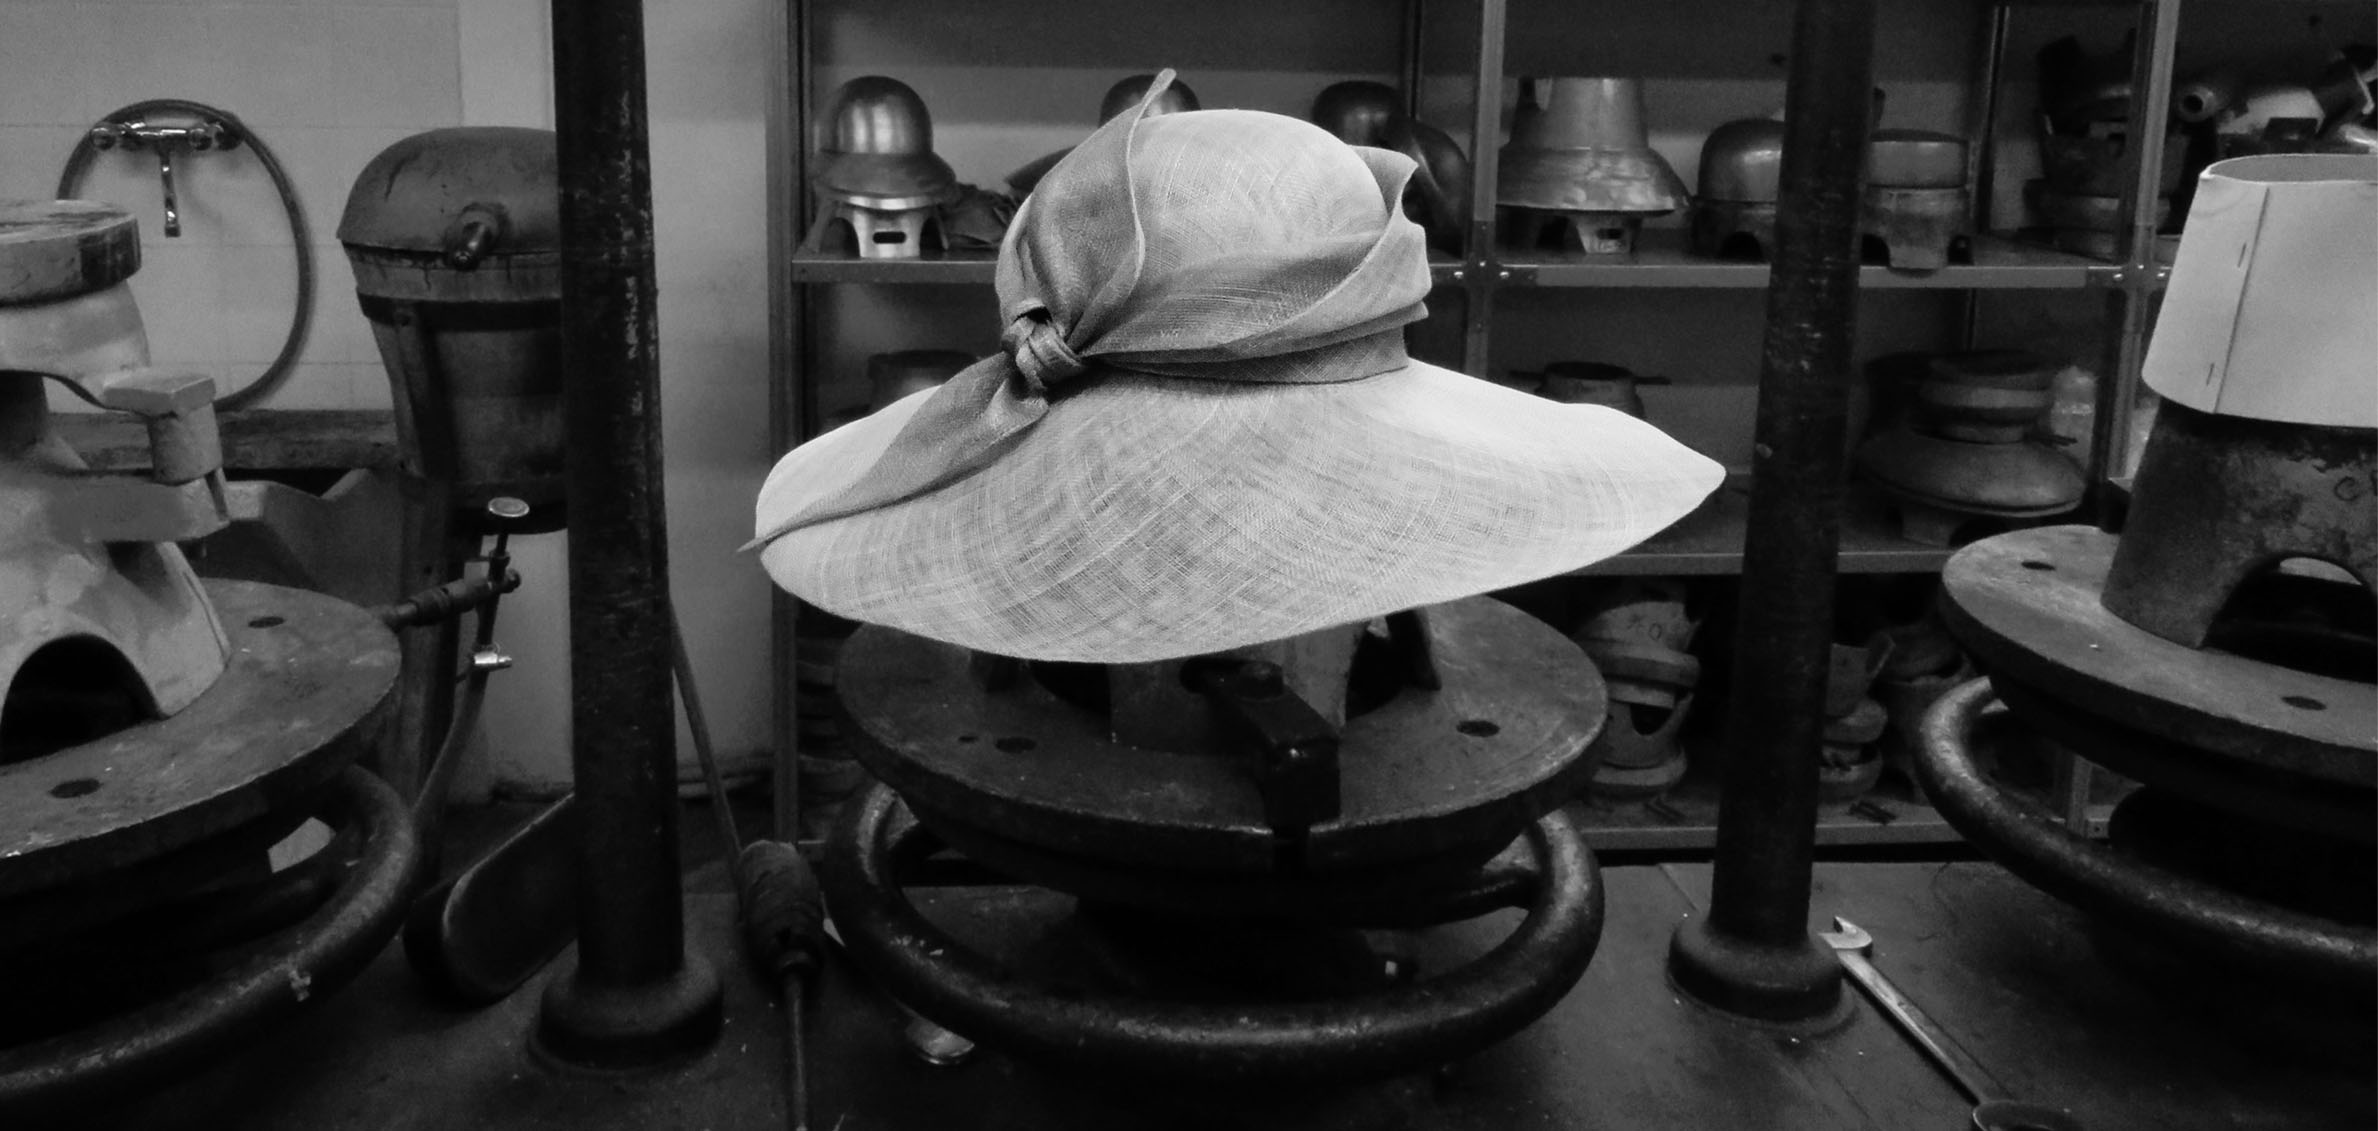 maglina straw bucket hat